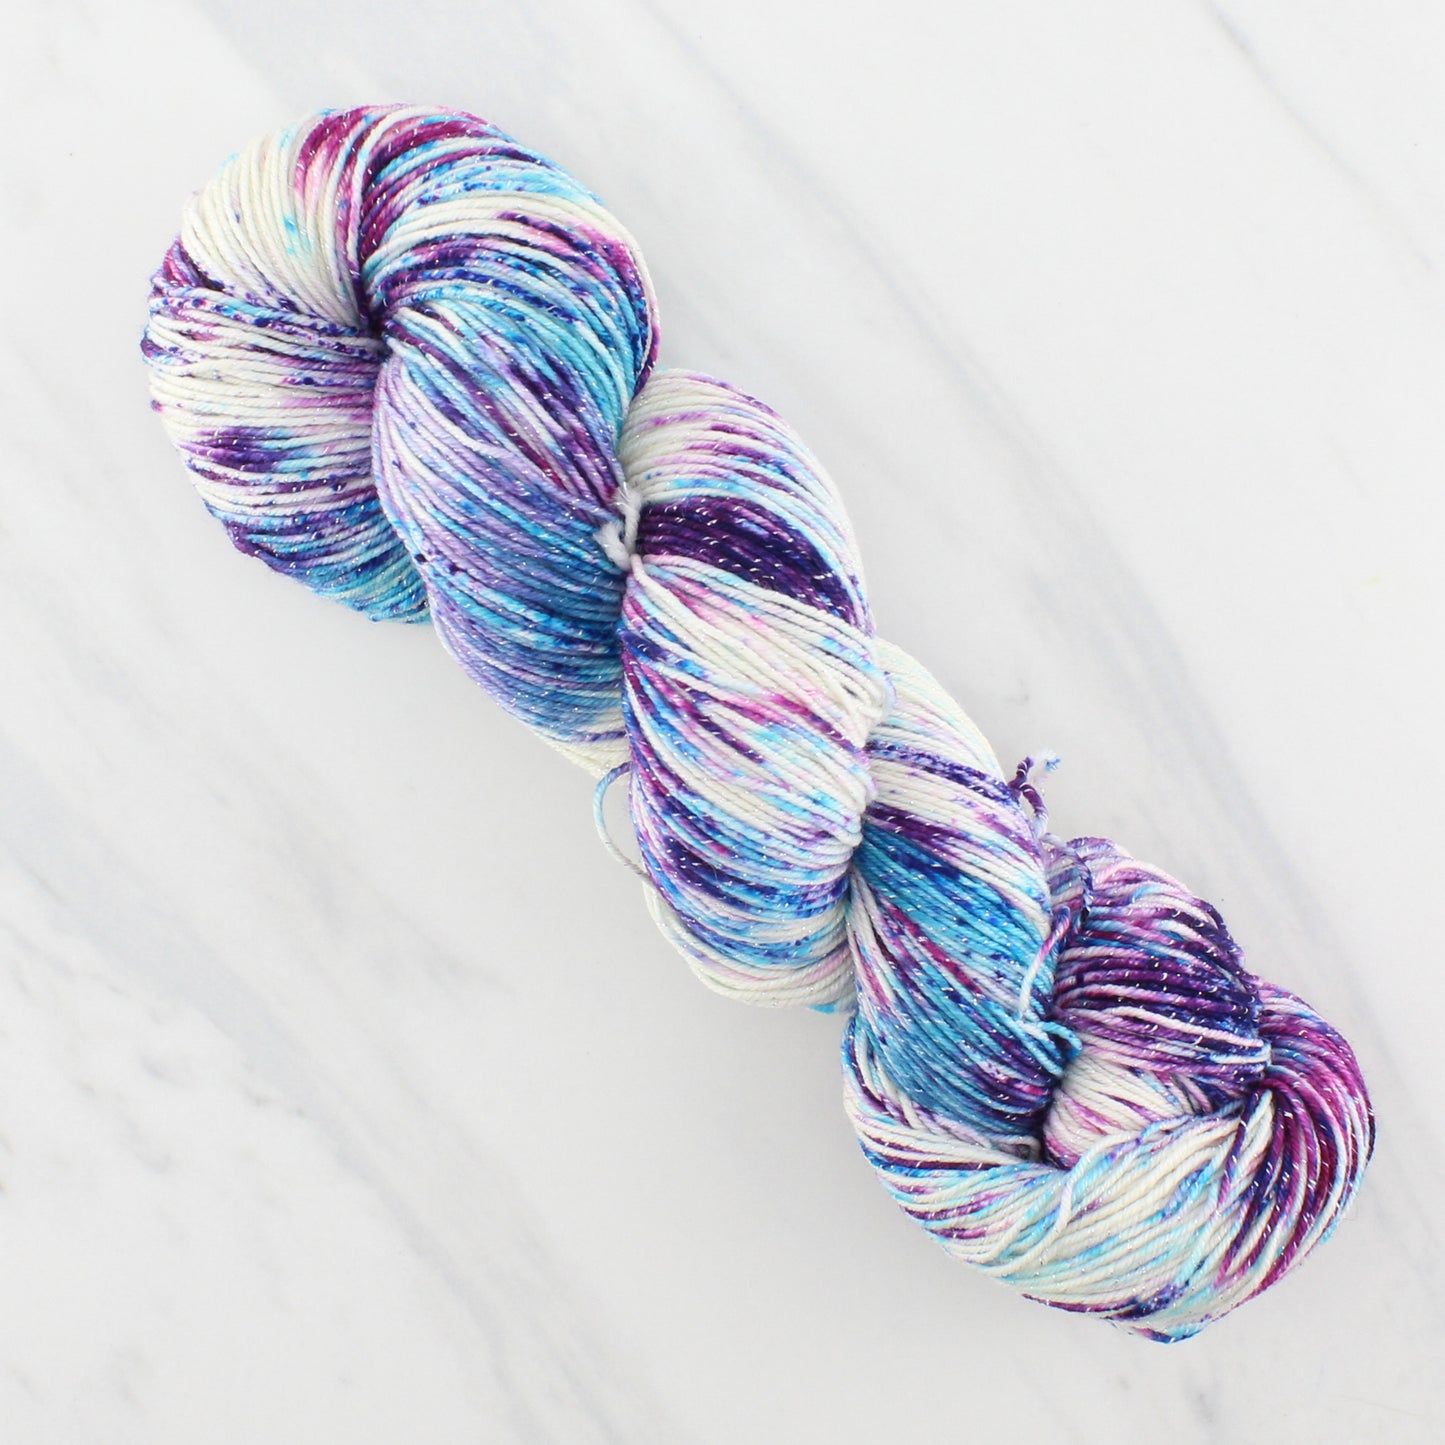 MONET Indie-Dyed Yarn on Sparkly Merino Sock